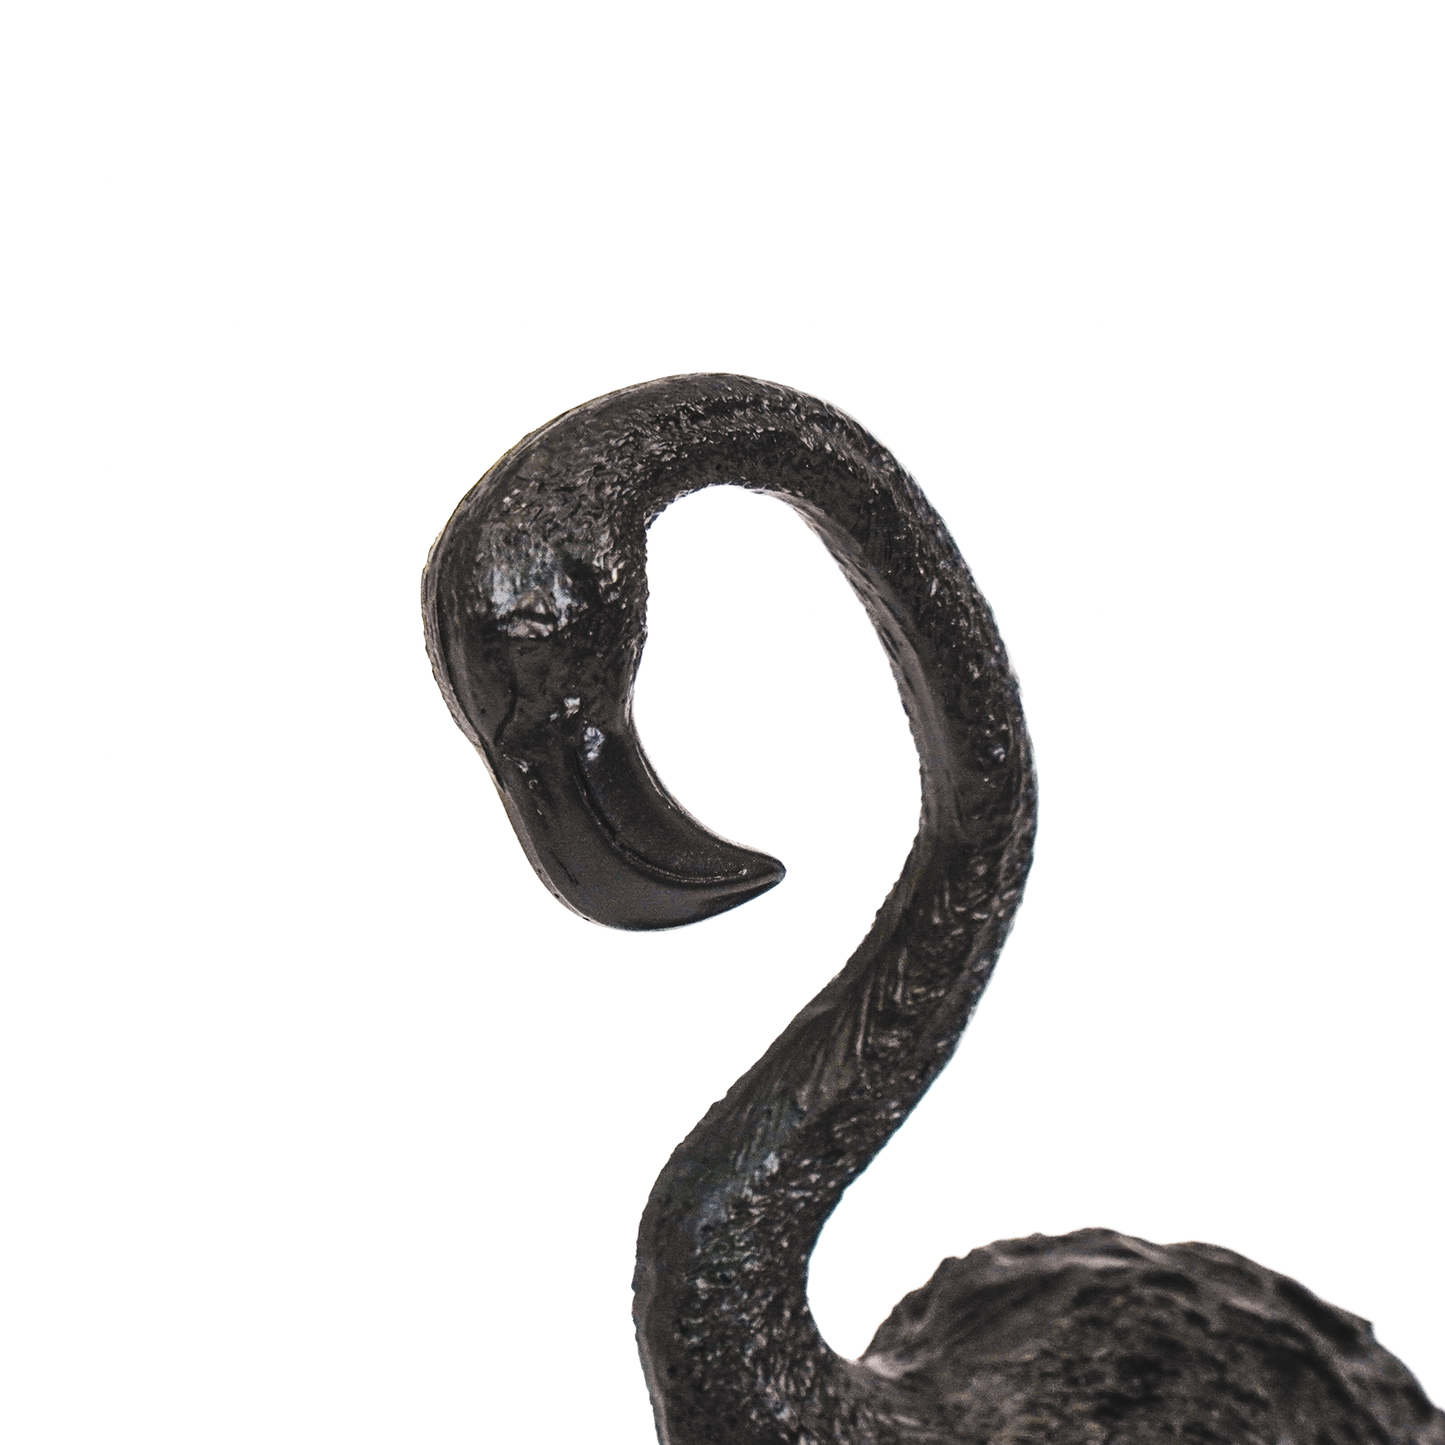 Housevitamin Flamingo Zwart - 9x7,5x19,5cm